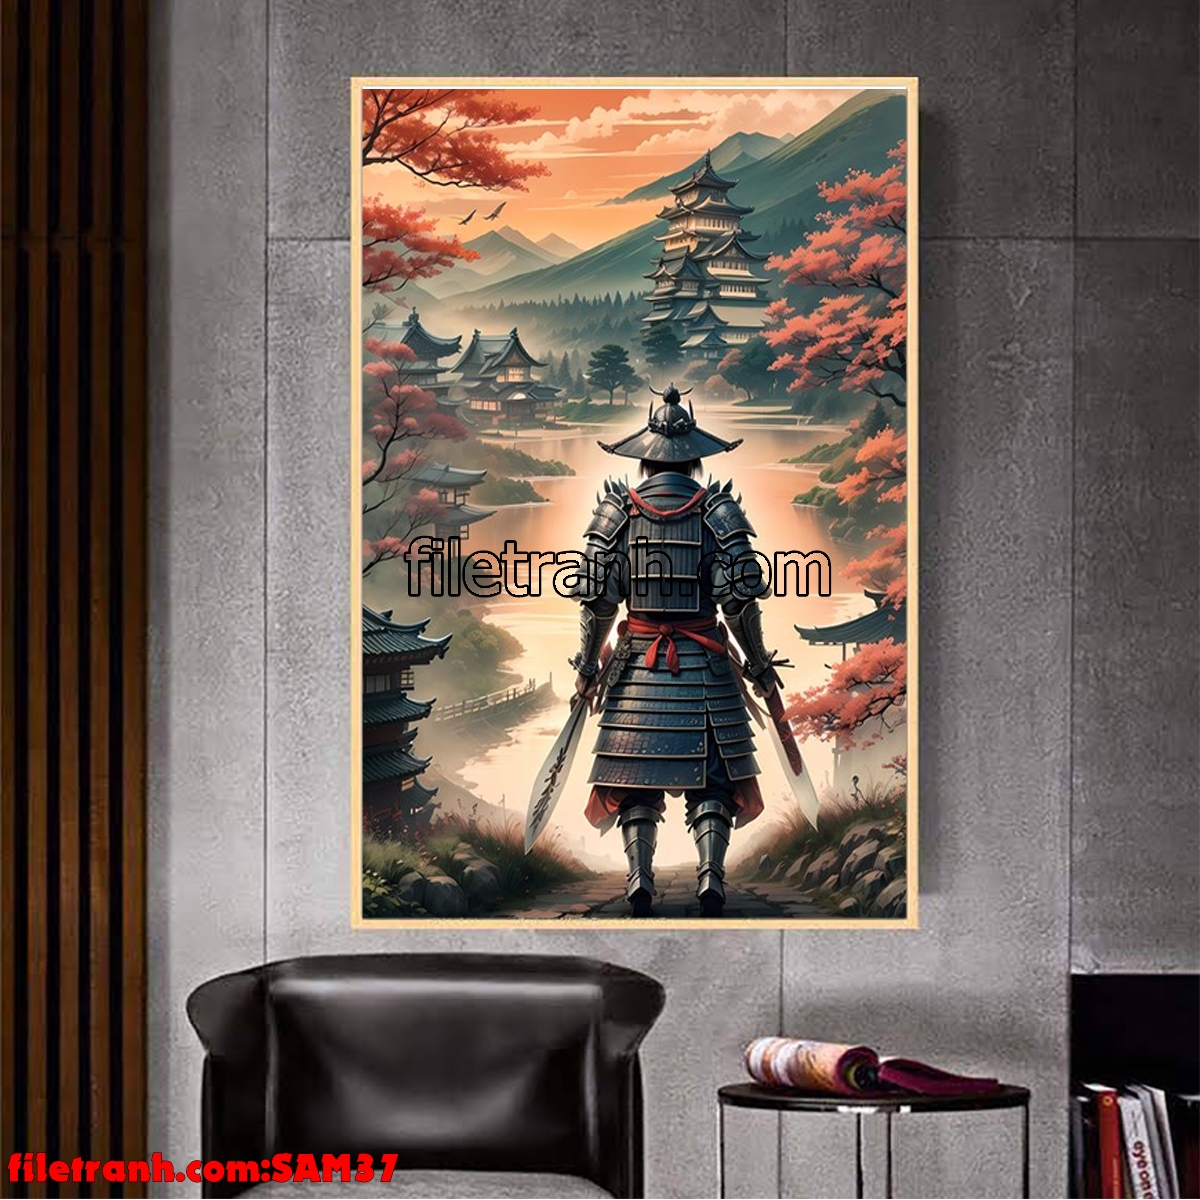 https://filetranh.com/samurai/file-tranh-samurai-vo-si-nhat-ban-sam37.html